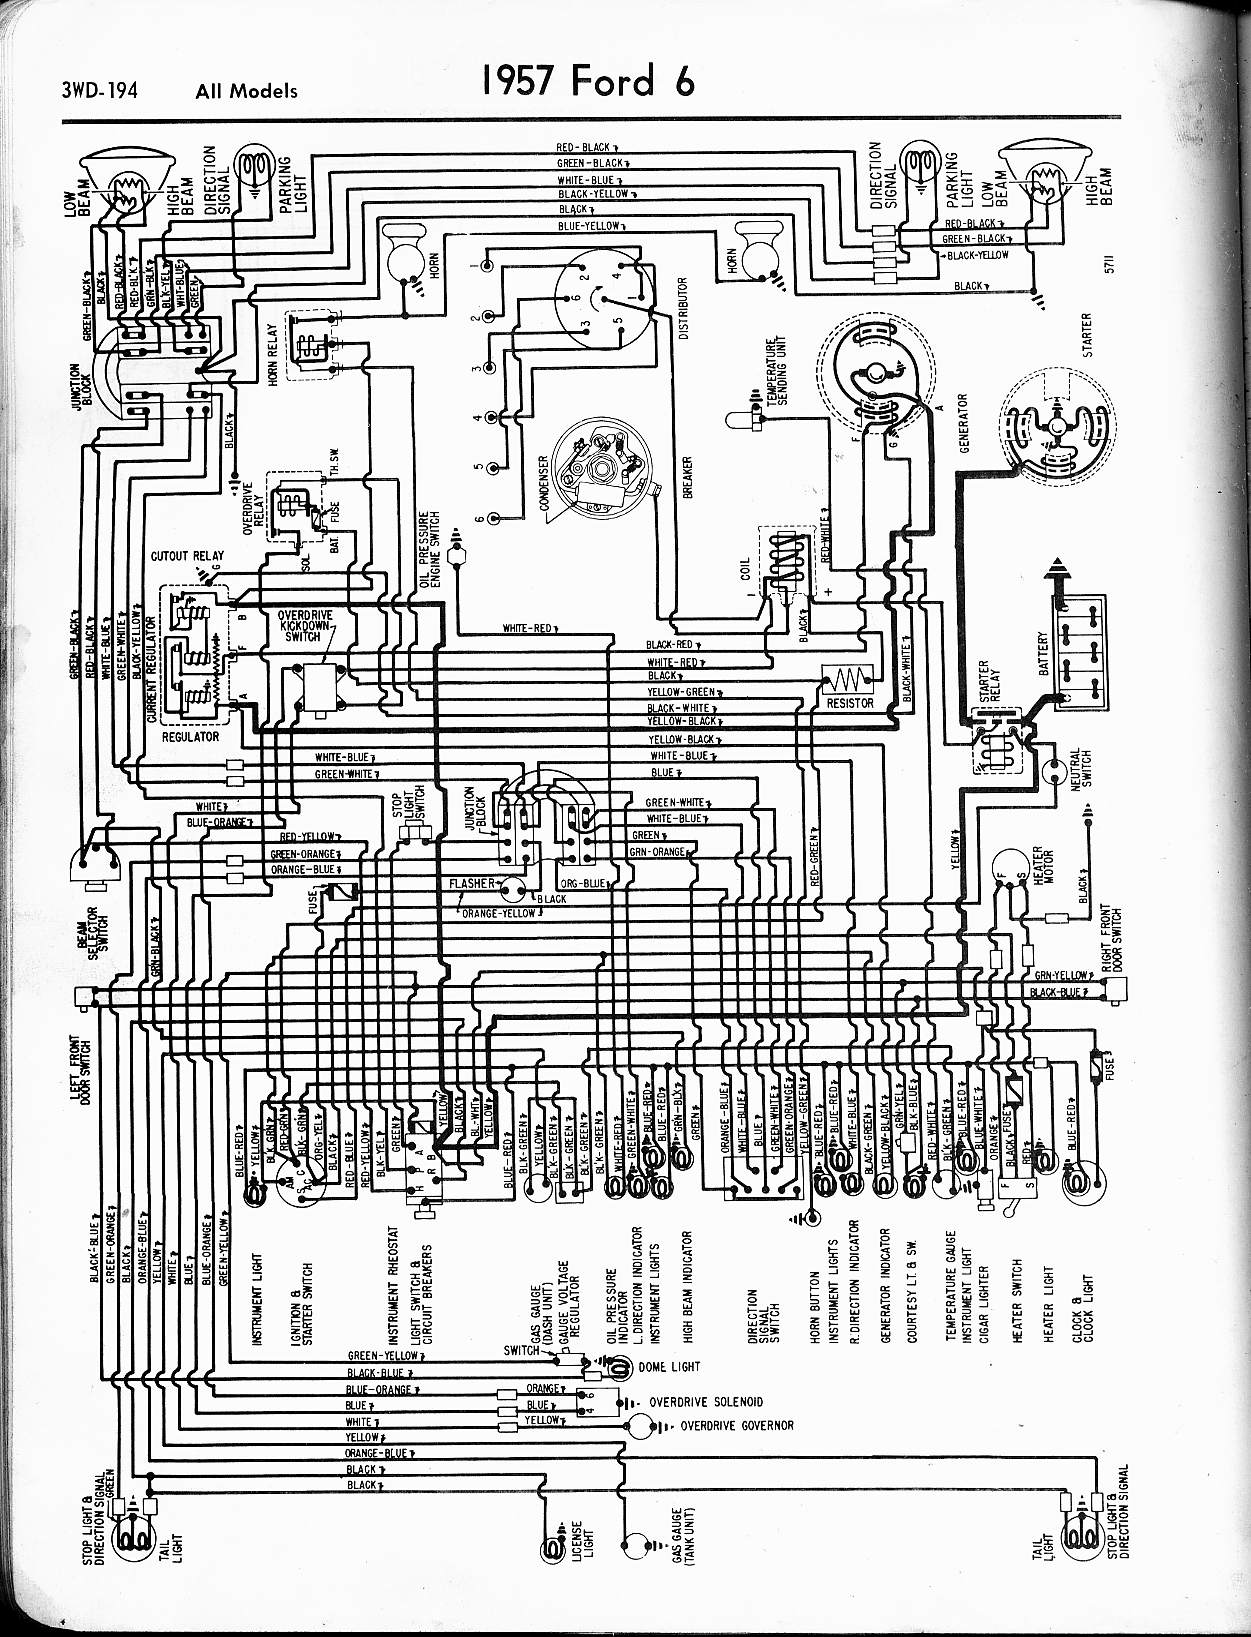 1985 Ford Alternator Wiring Diagram from wiring-wizard.com